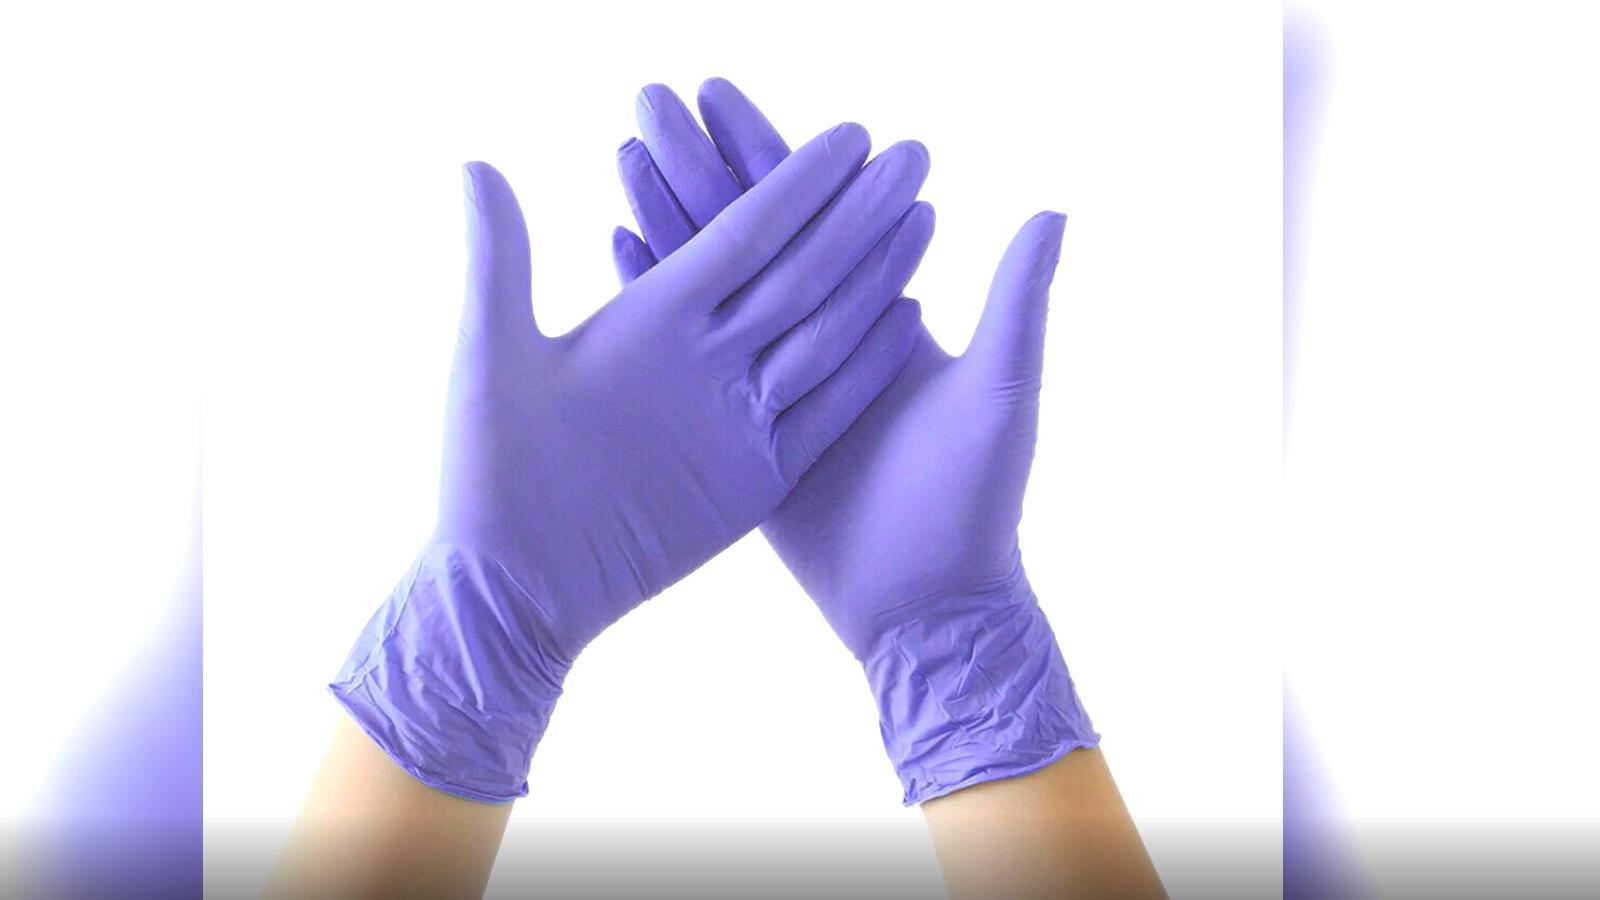 Purple Nitrile Gloves